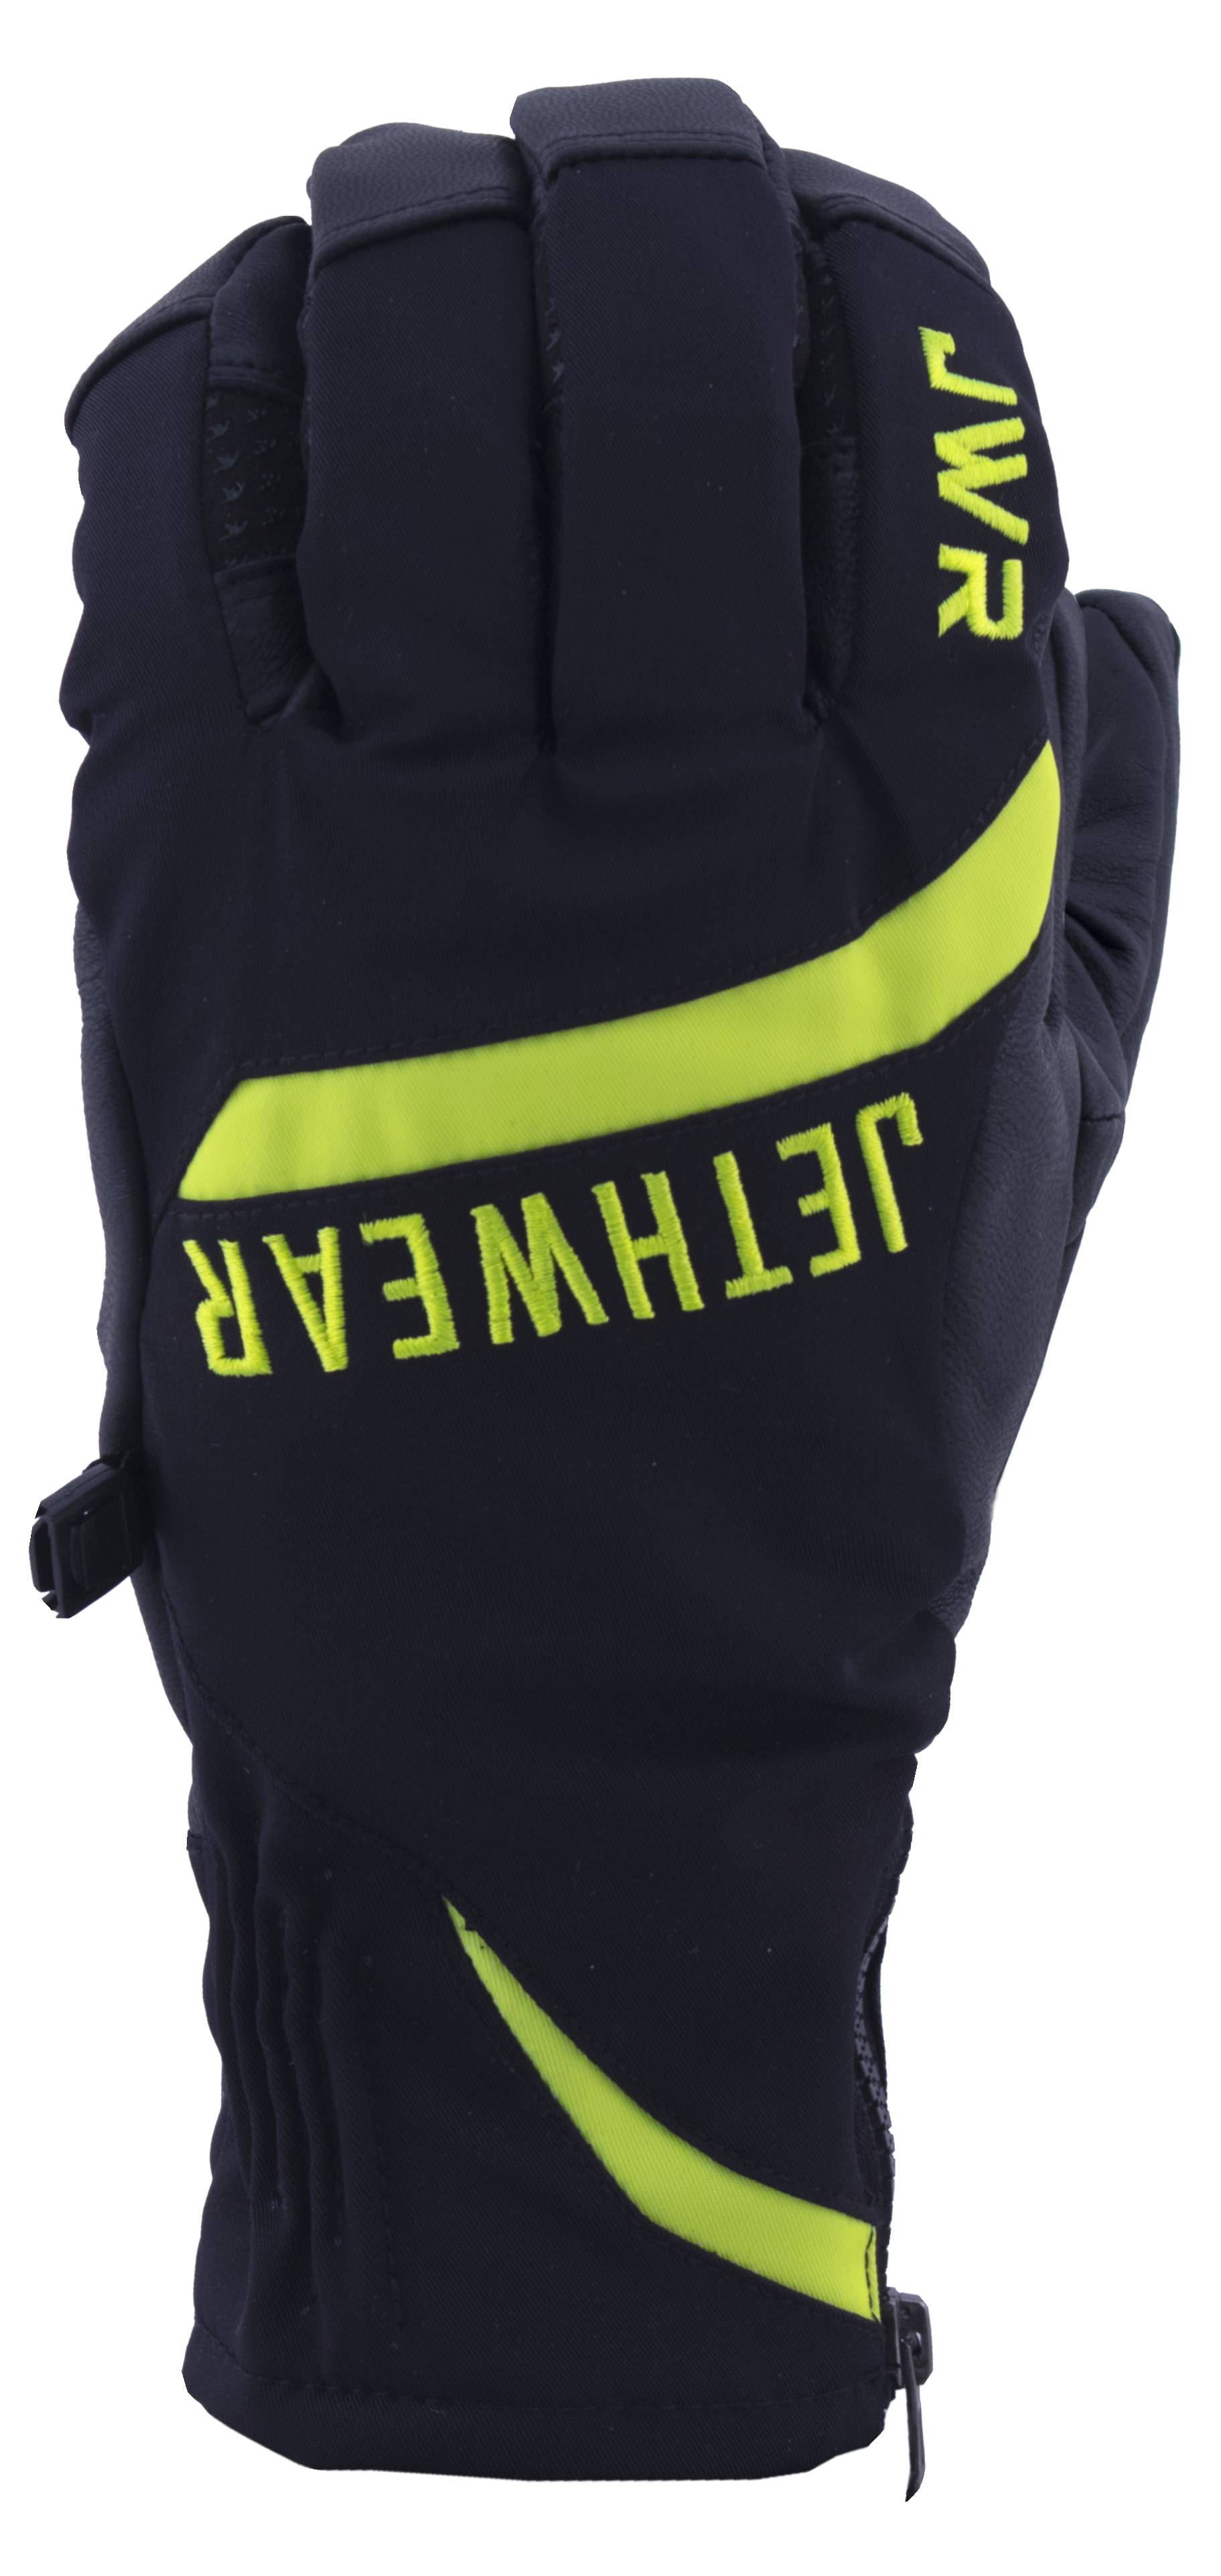 Handskar Jethwear Empire Glove, Svart/Gul